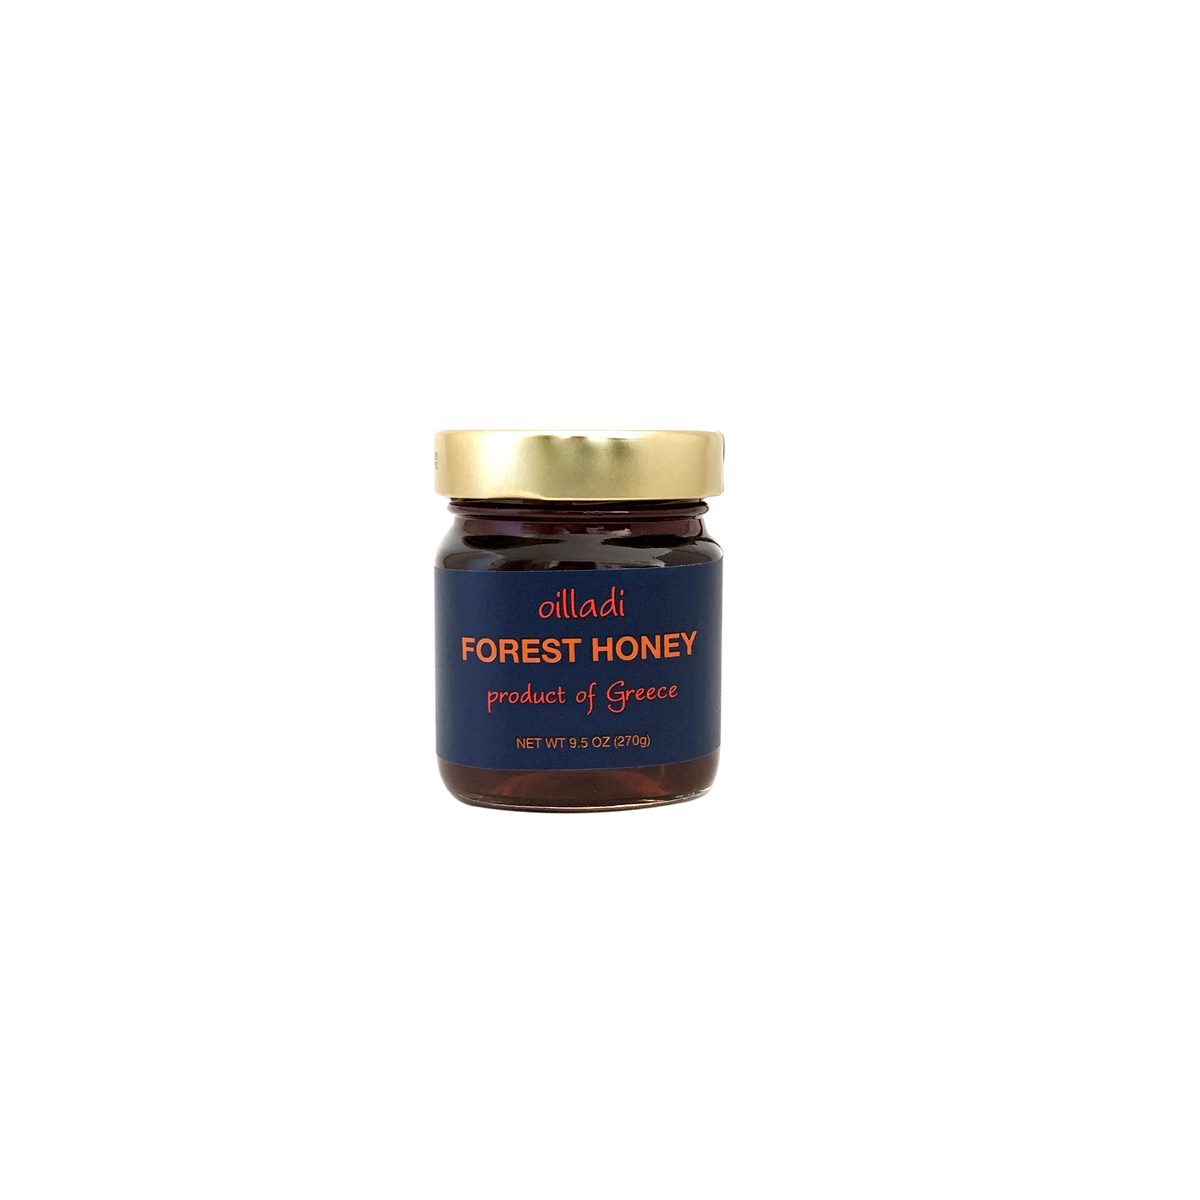 Front of Oilladi forest honey jar